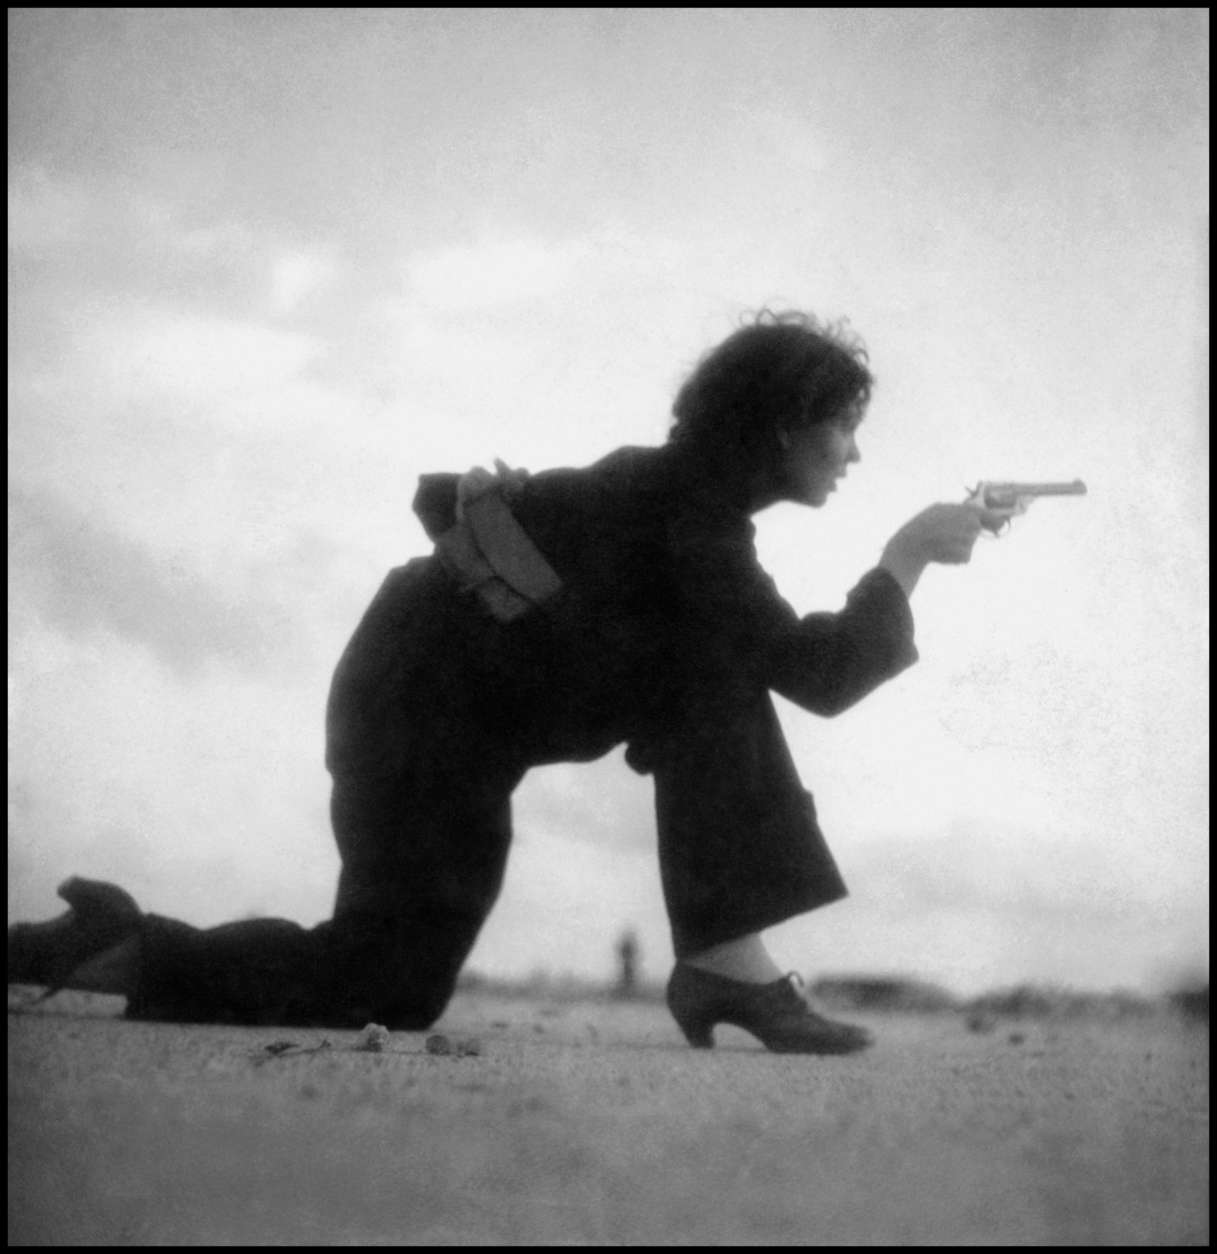 Gerda Taro, [Republican militiawoman training on the beach, outside Barcelona], August 1936
©Gerda Taro, Courtesy International Center of Photography